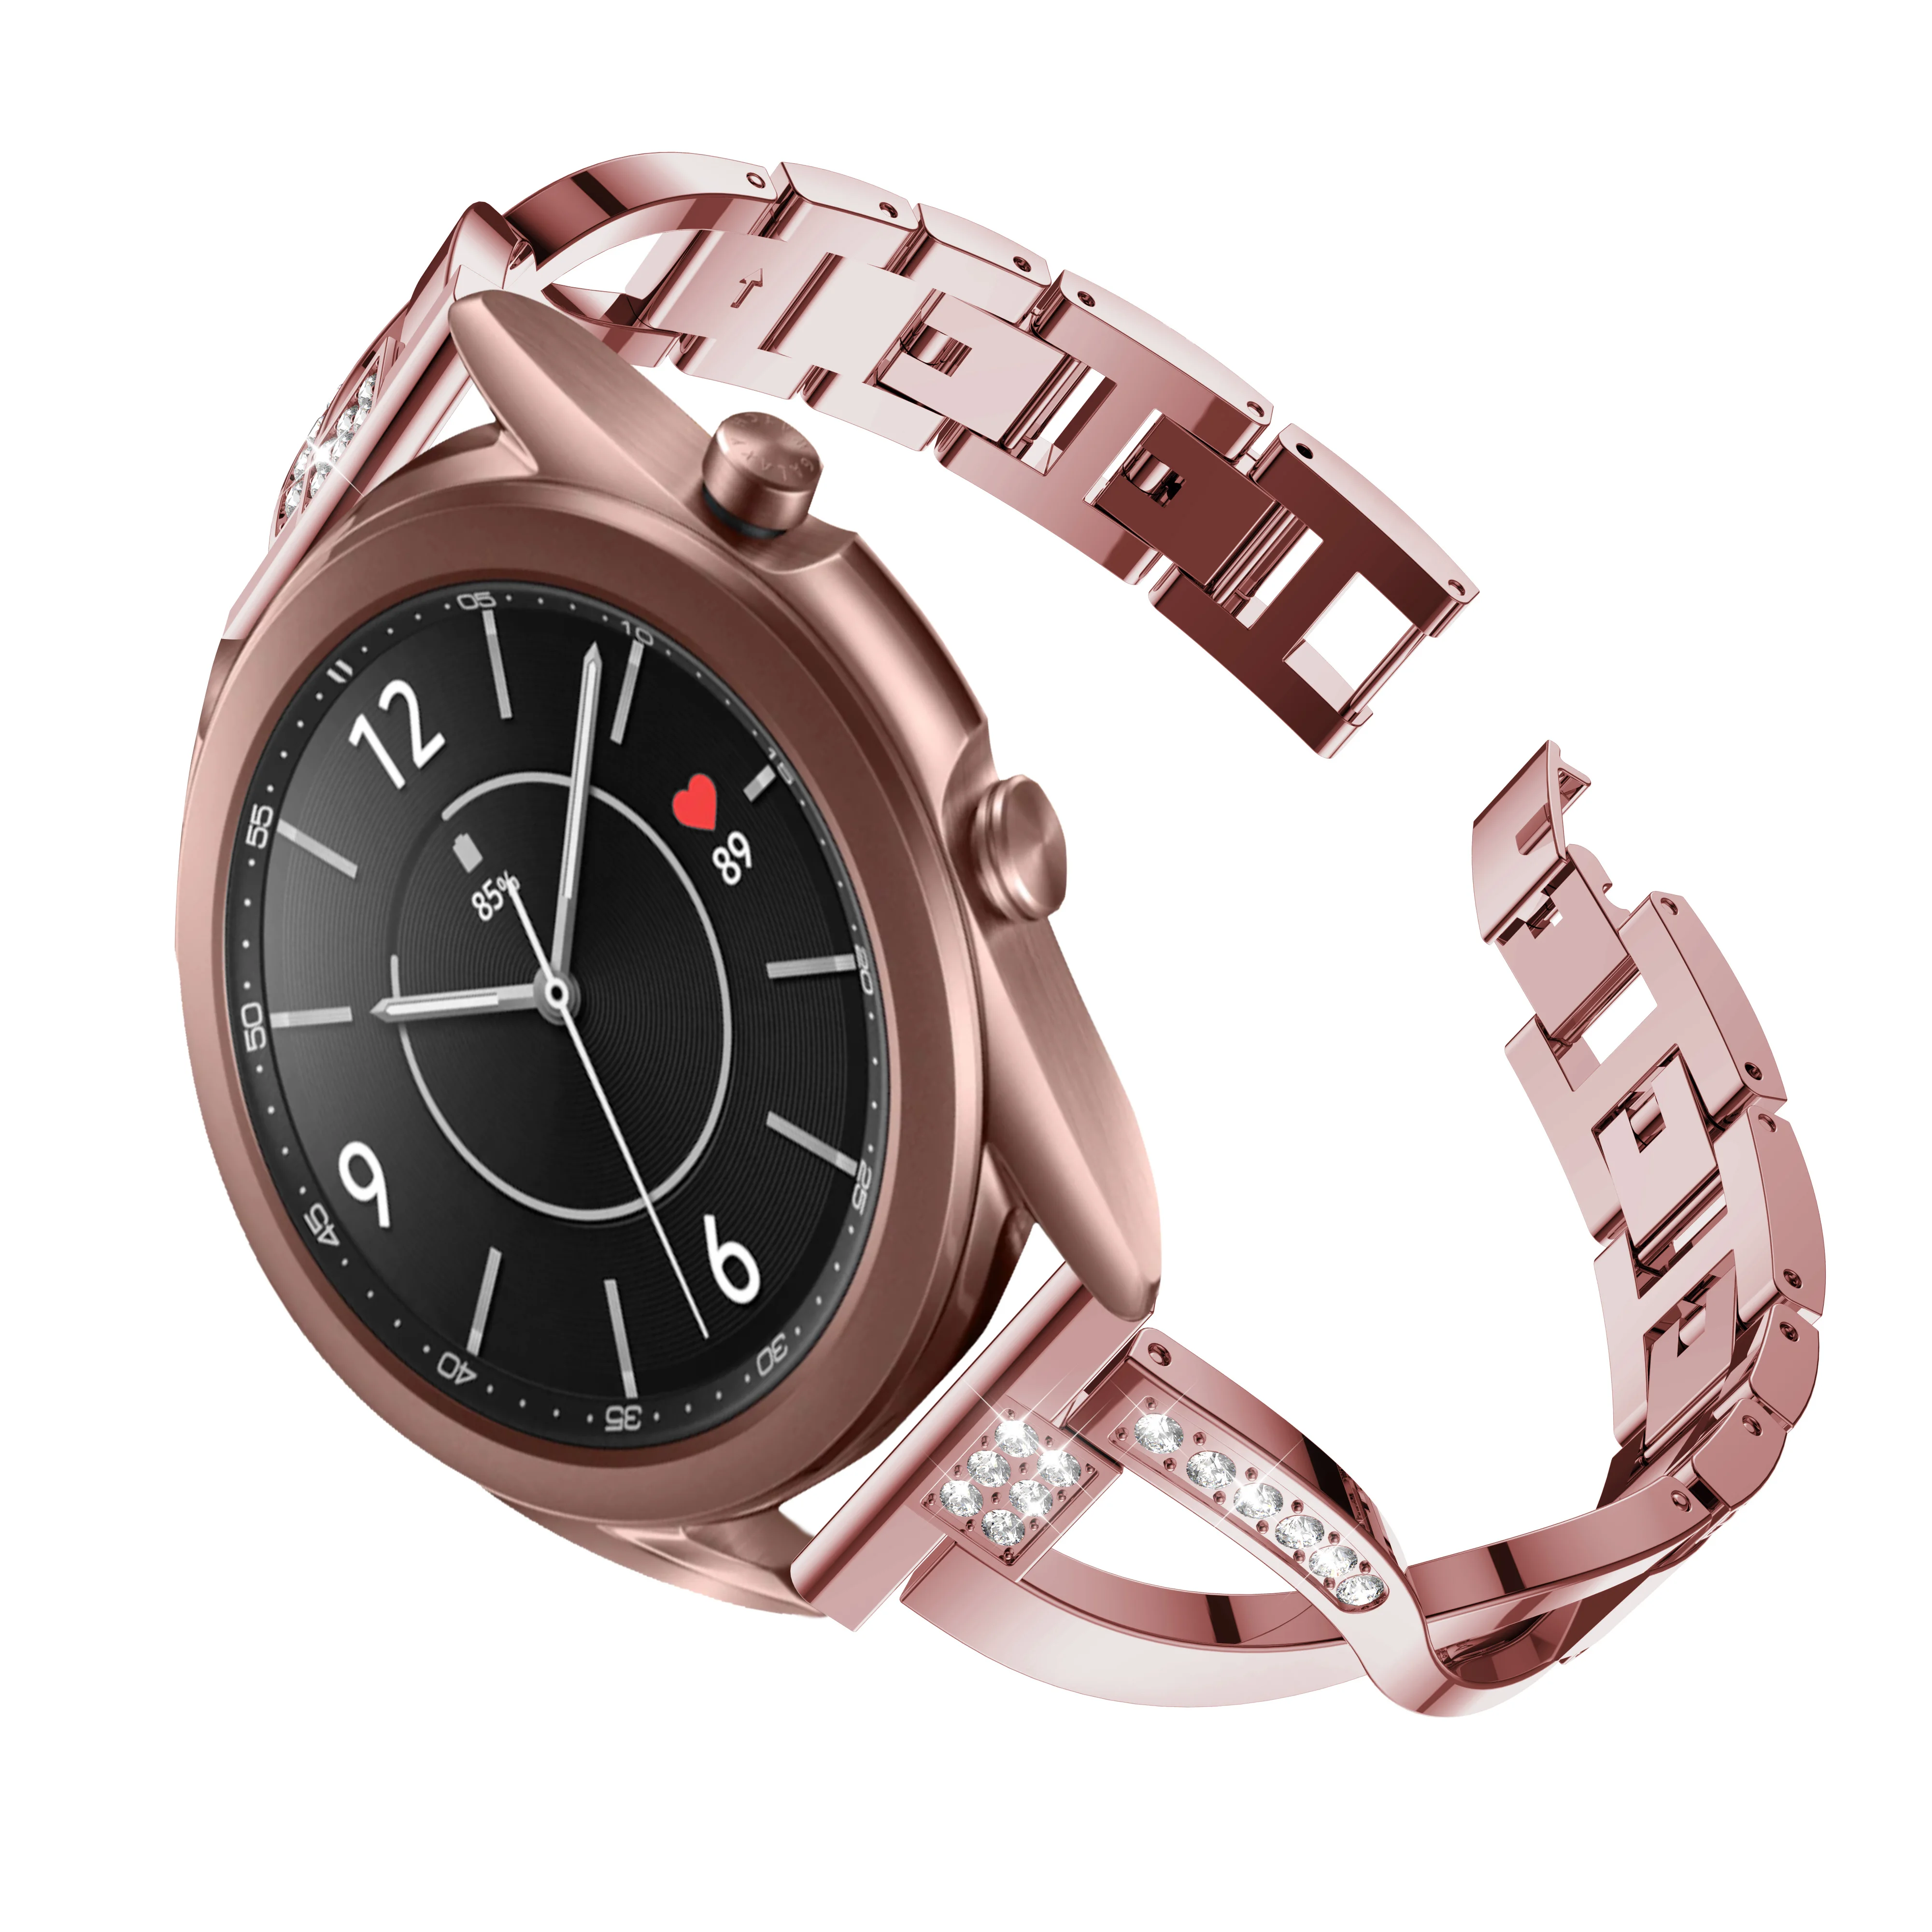 Manšeta Za Samsung Galaxy Watch 3 45mm 41mm Bling Diamond WatchBand Kovine Jeklo Zamenjava moda watchStrap band Zapestnica